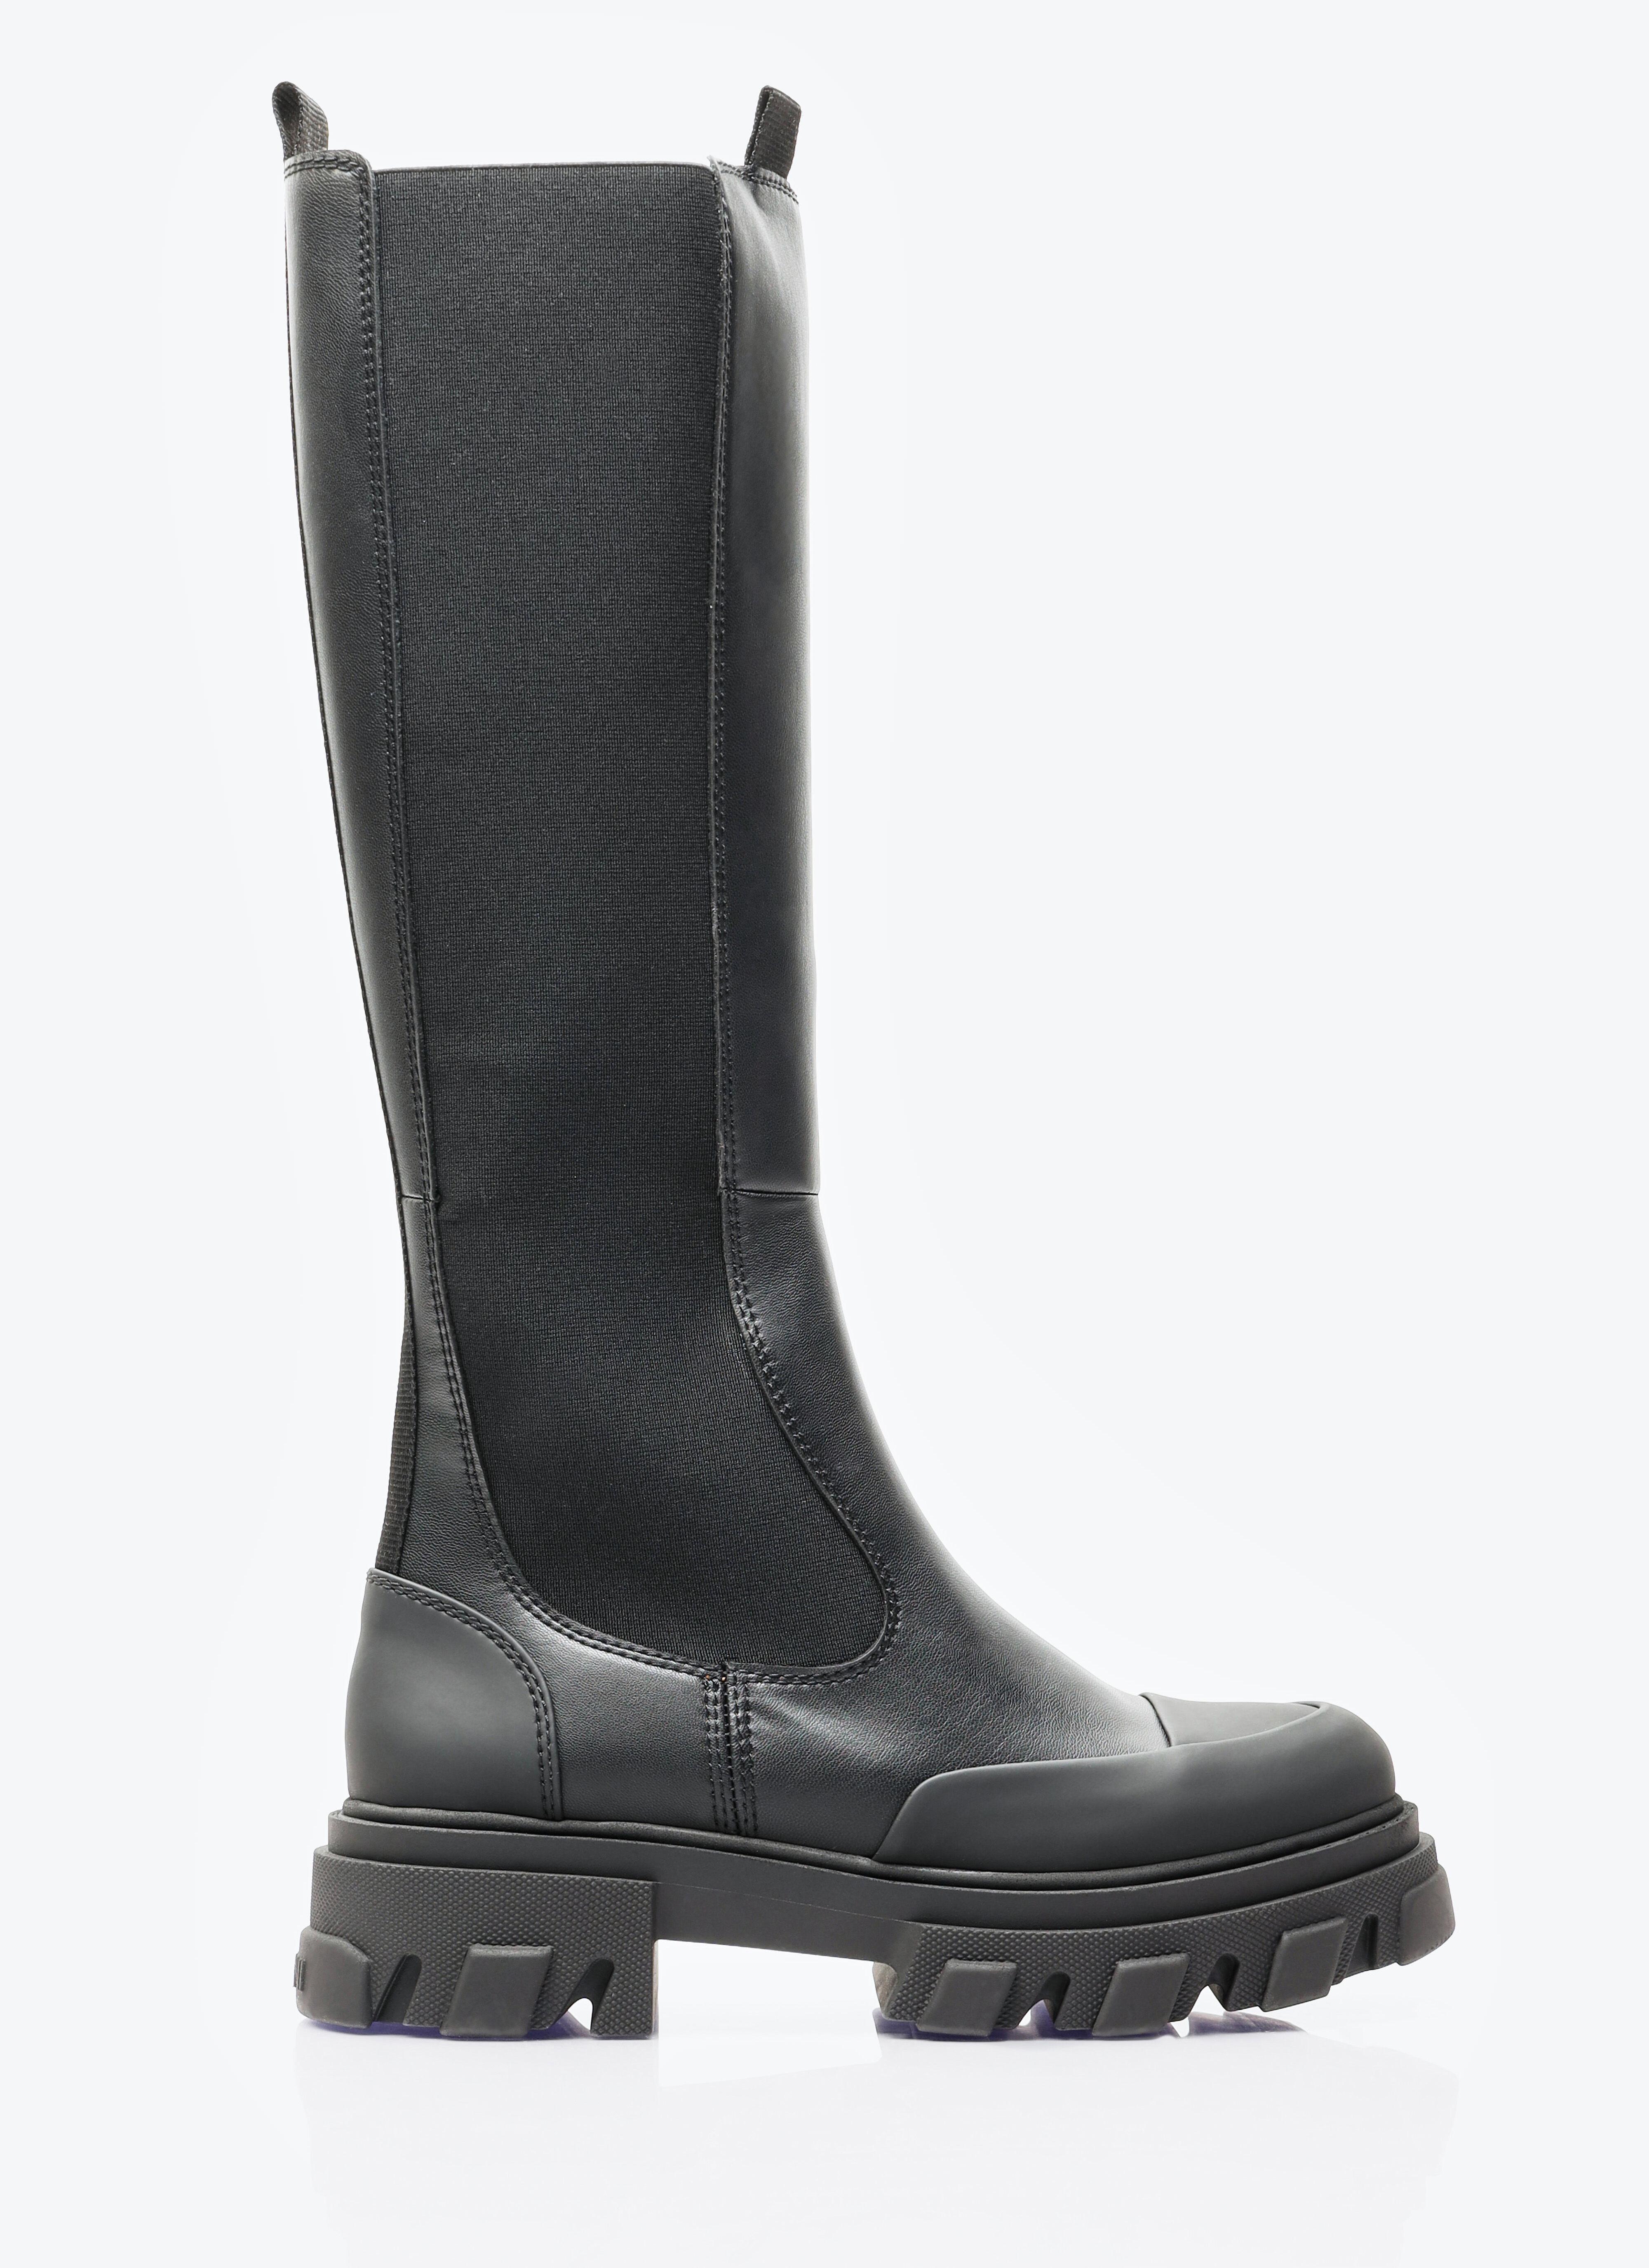 Saint Laurent Cleated High Chelsea Boots Black sla0256012